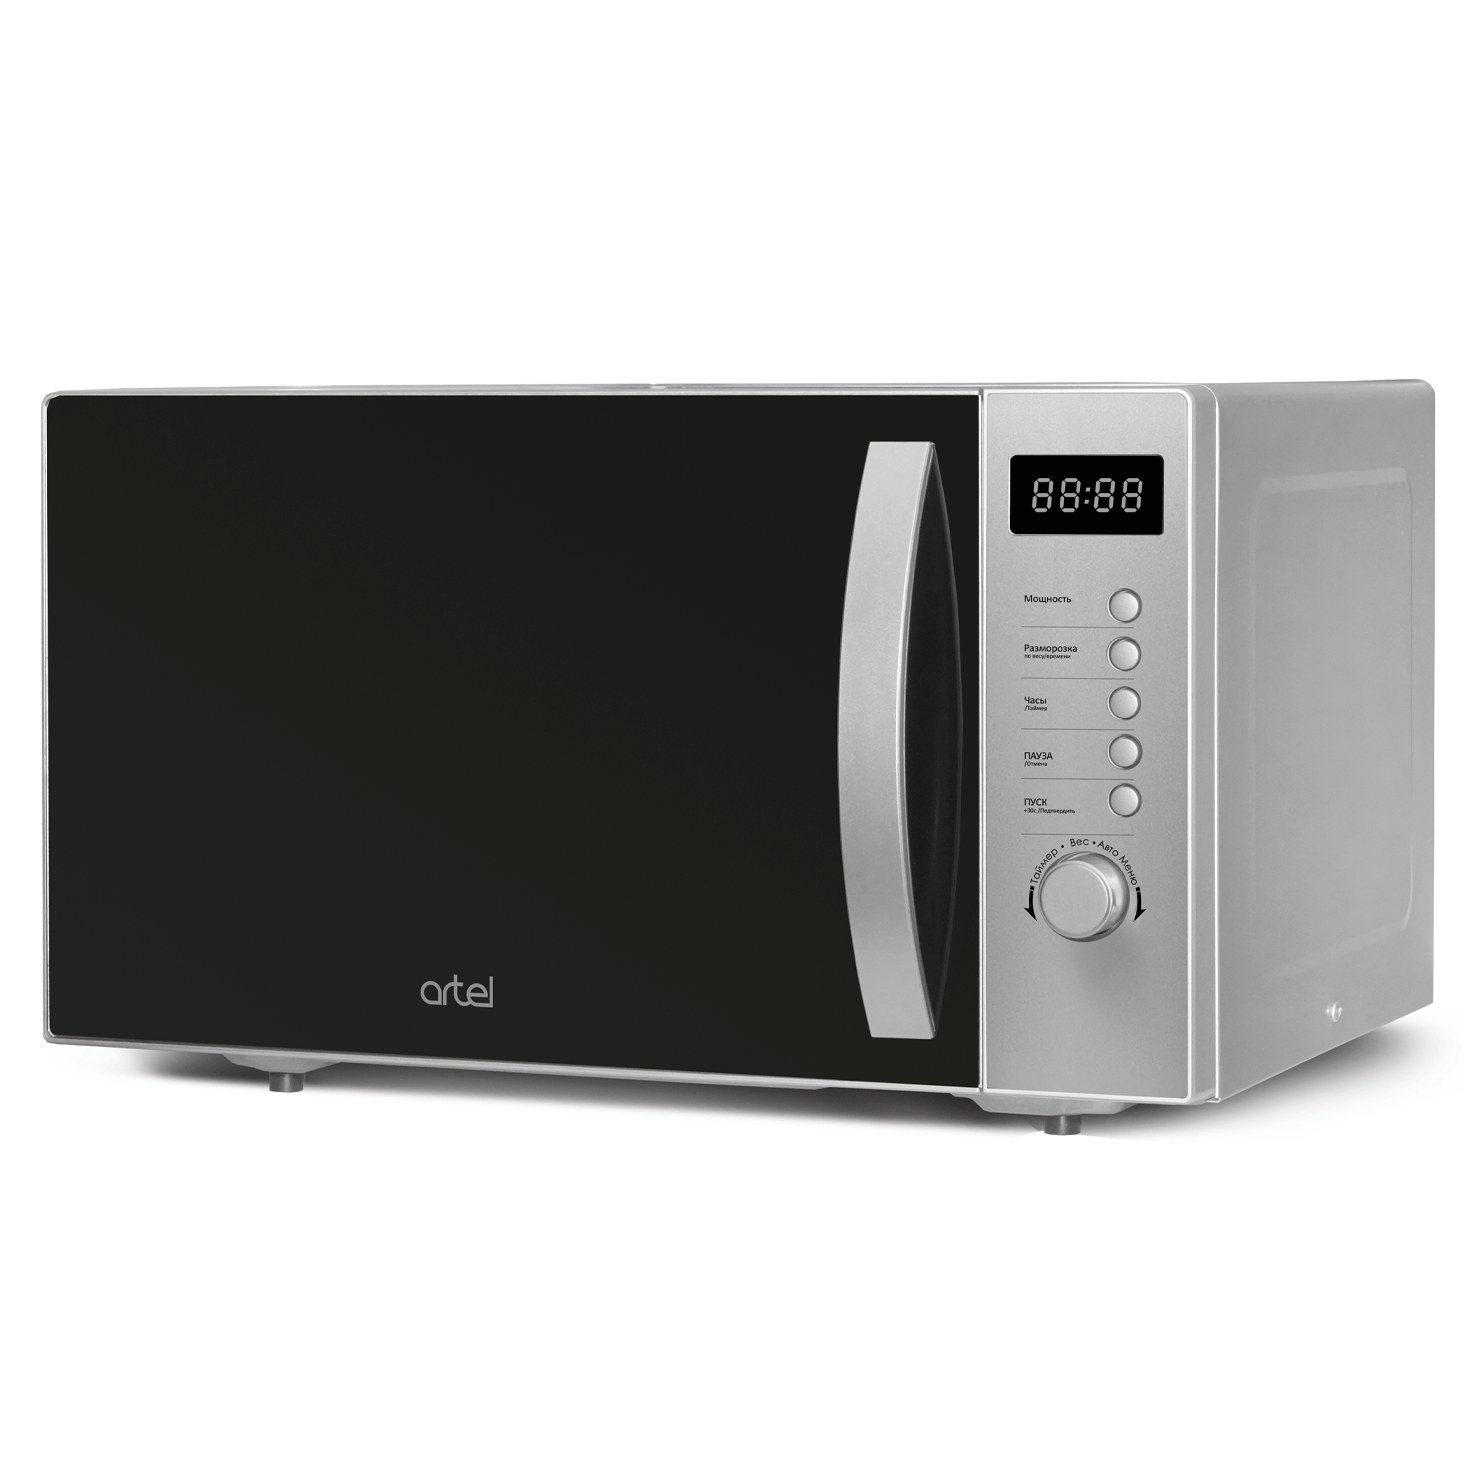 Artel AM823AK7 microwave